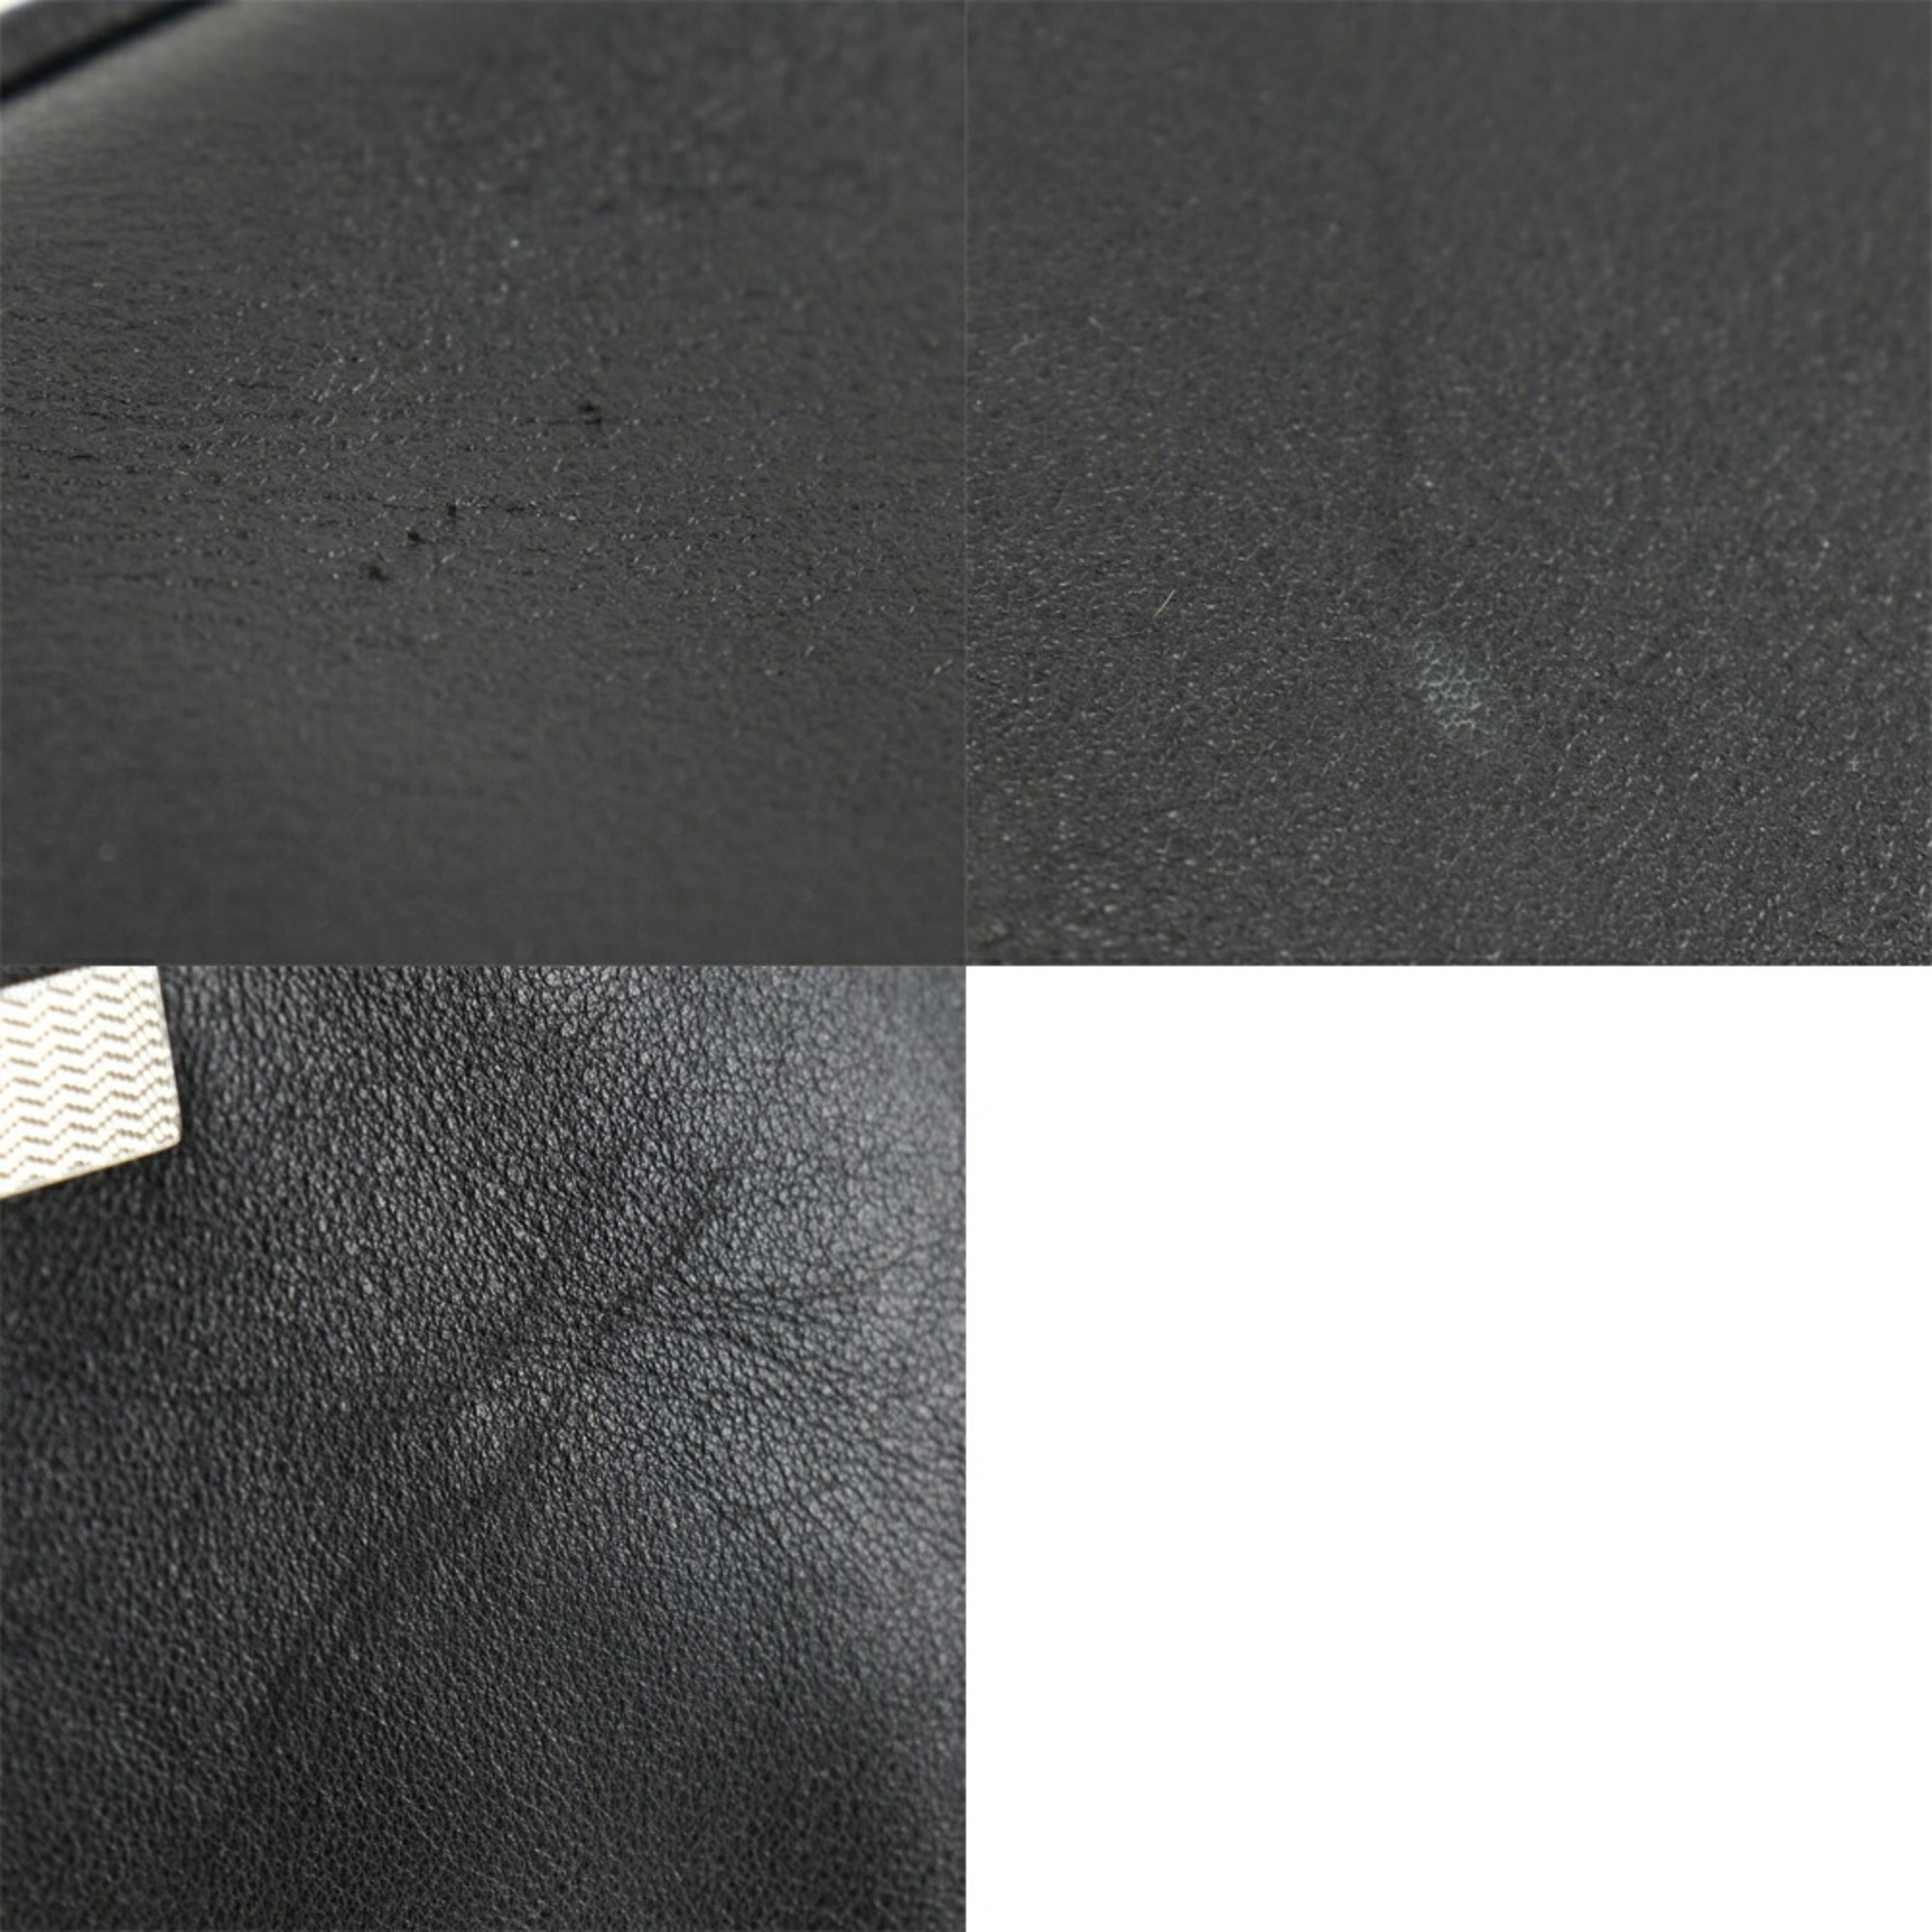 GUCCI Bamboo Shoulder Bag 001.3865 Calf Made in Italy Black A5 Zipper Women's